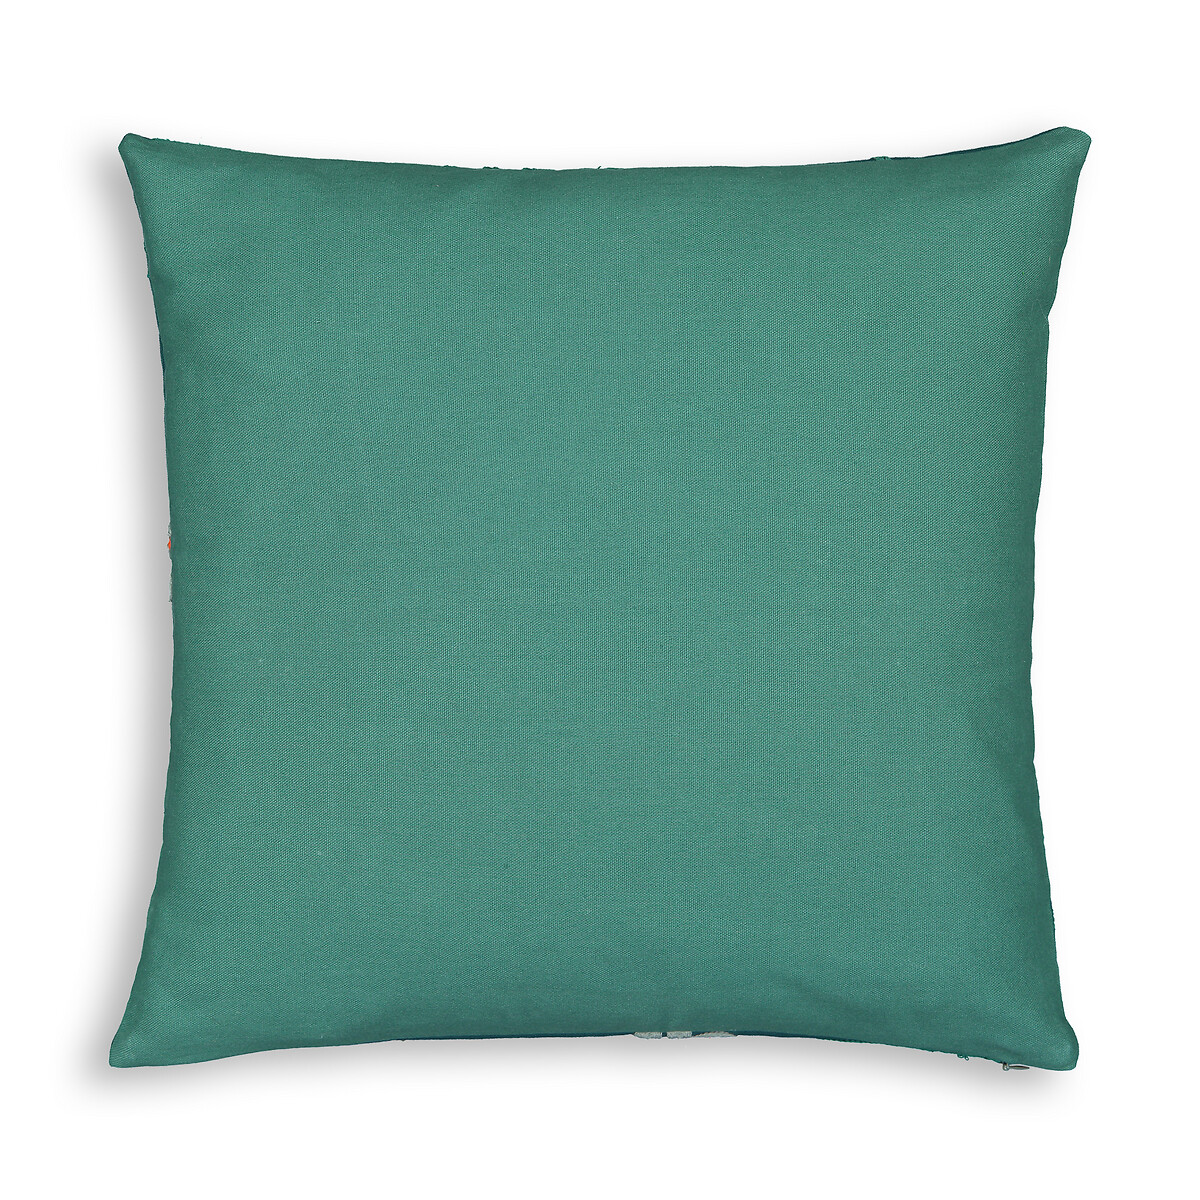 Чехол LaRedoute Для подушки с вышивкой Luxuriance 45 x 45 см зеленый, размер 45 x 45 см - фото 2